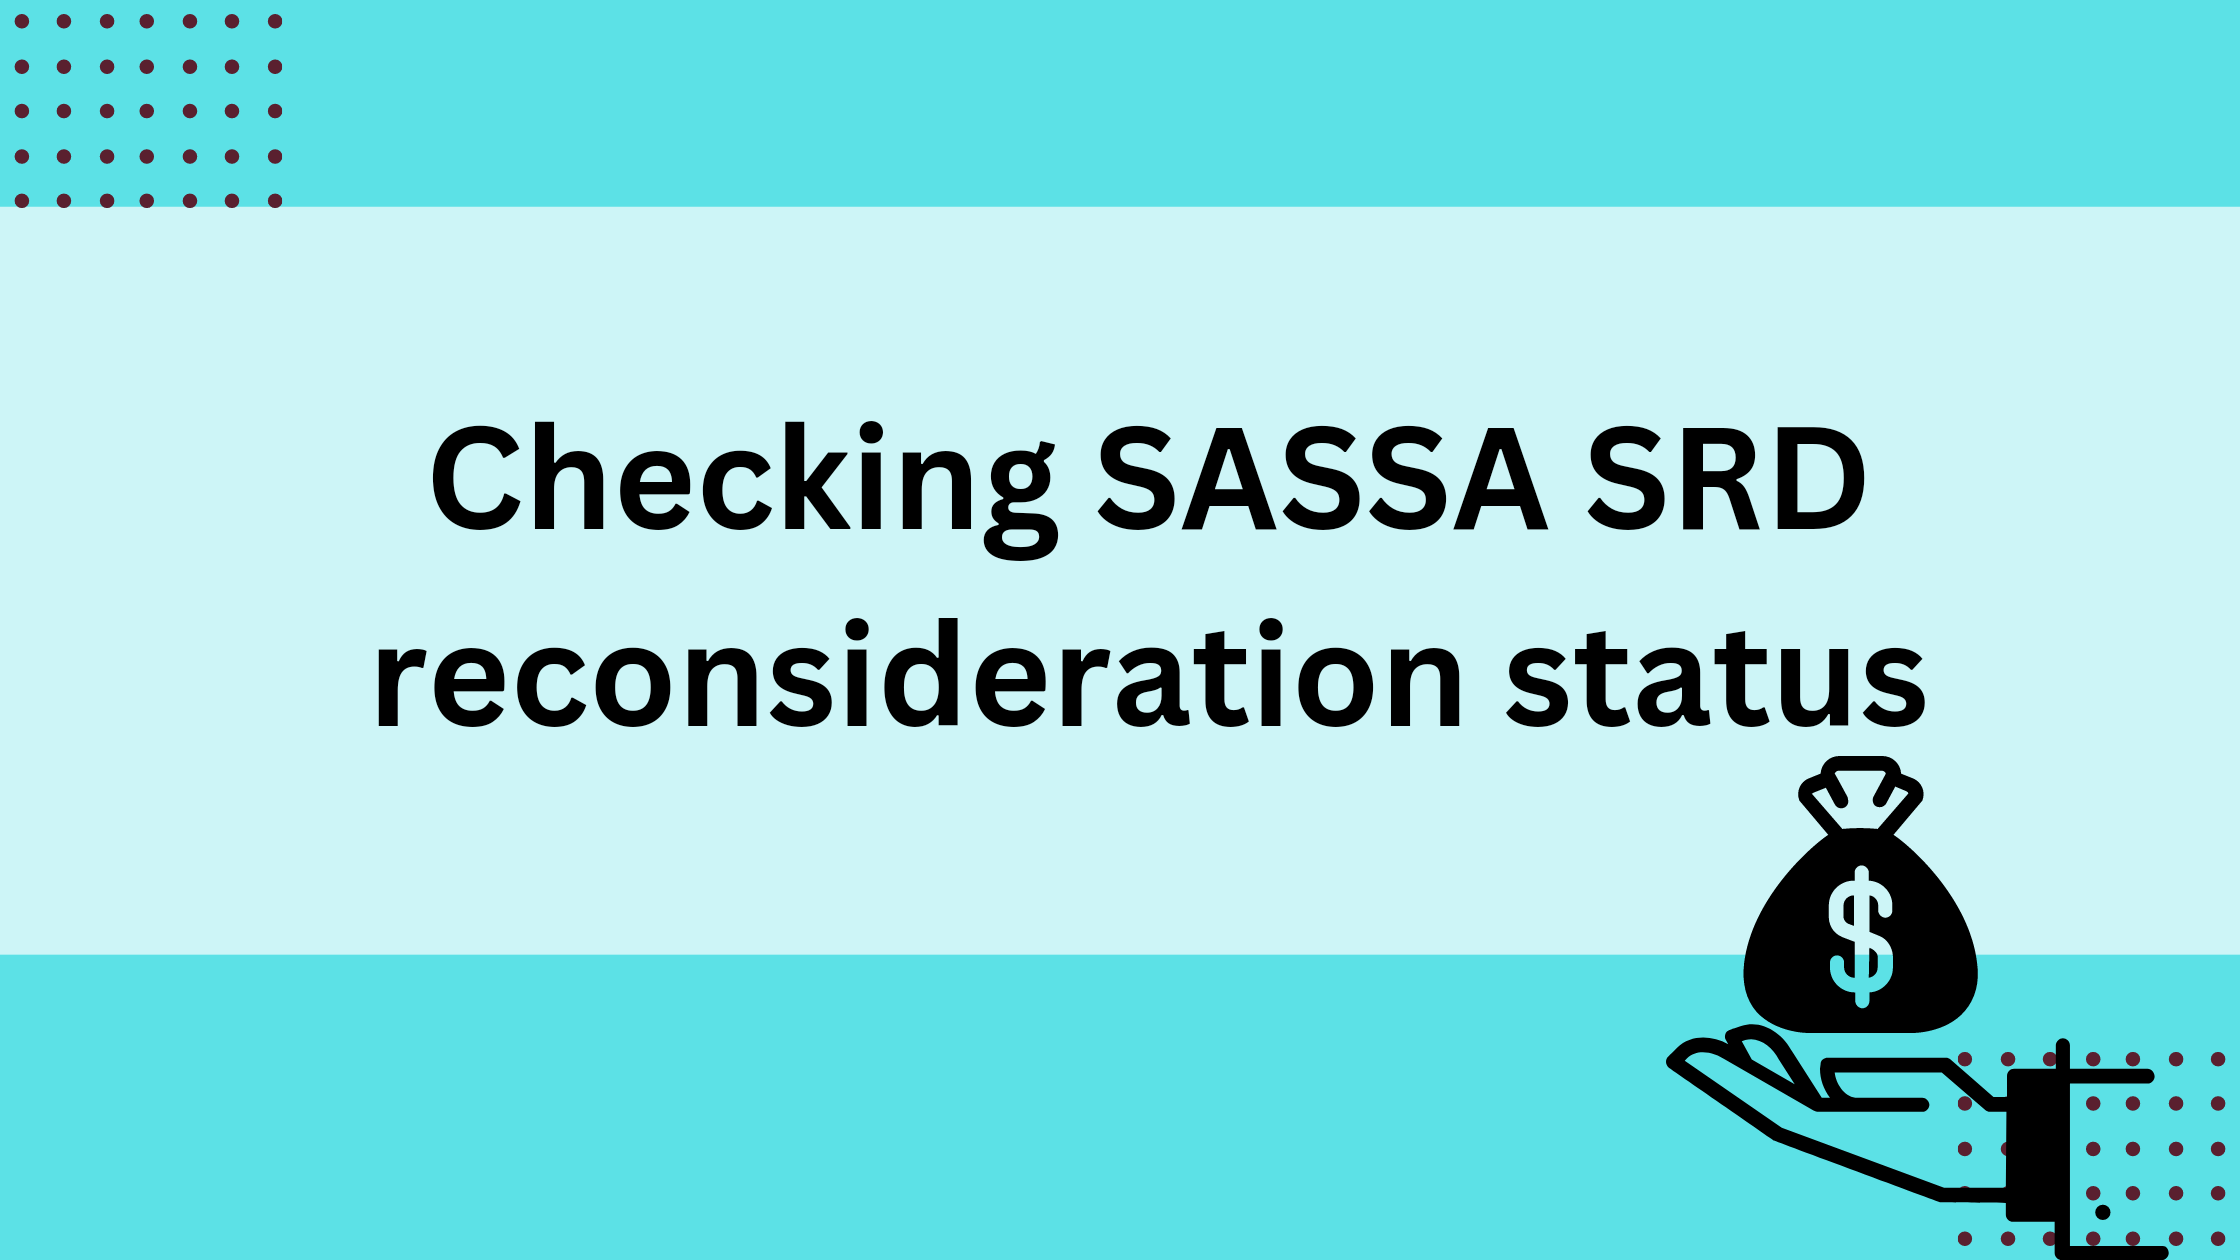 Checking SASSA SRD reconsideration status